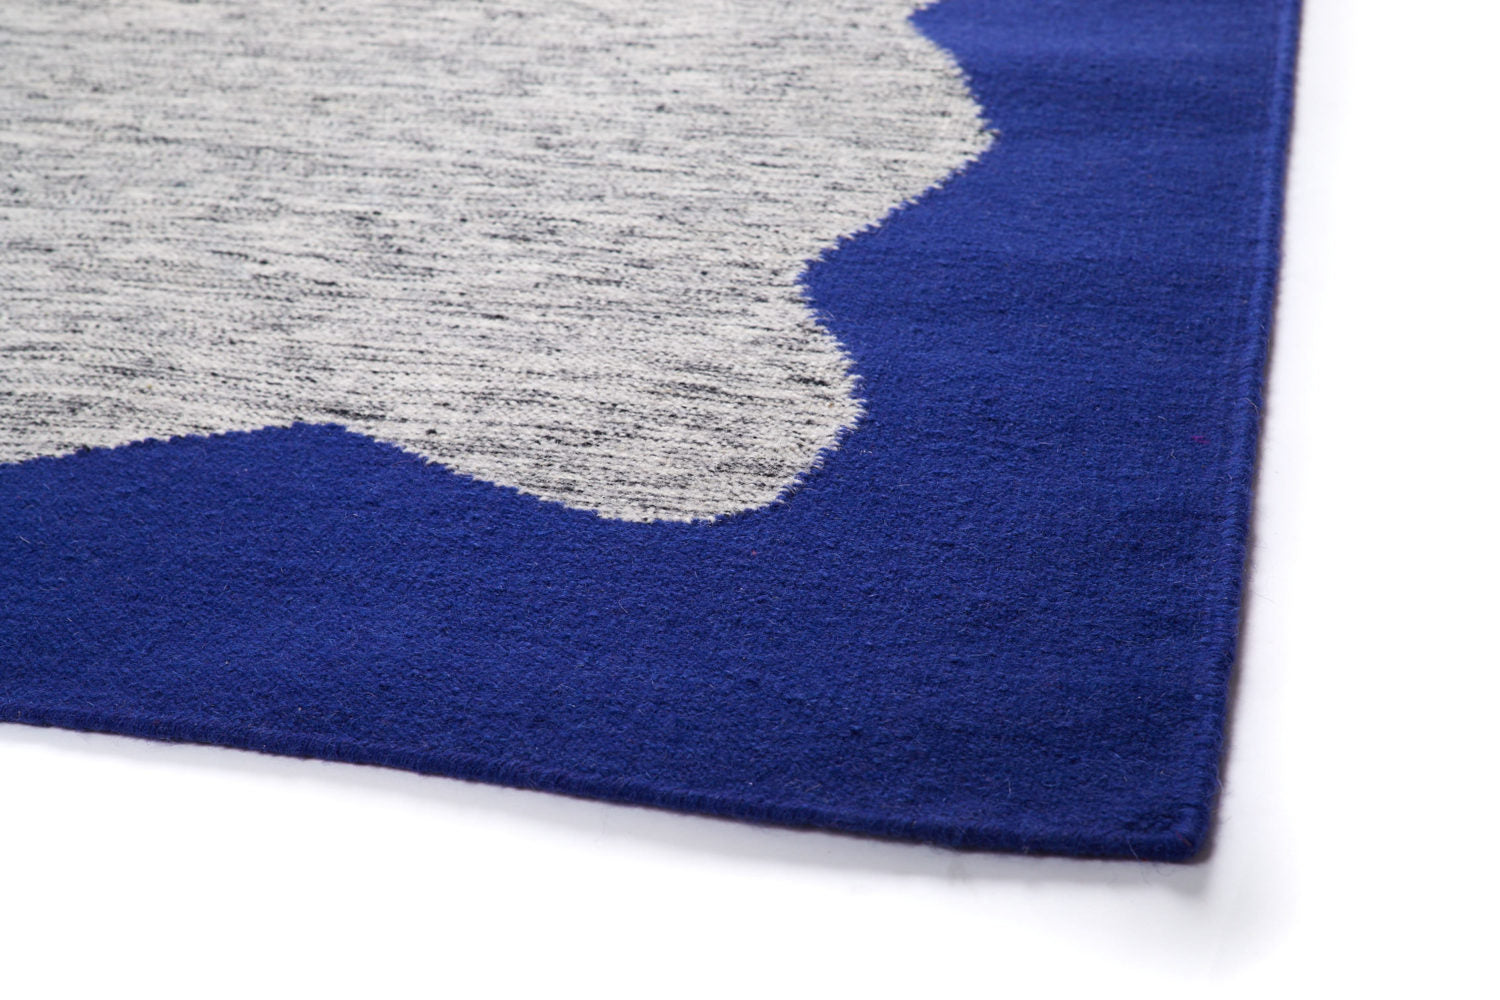 Portal Inverse in Blue Wool Rug by 2LG Studio